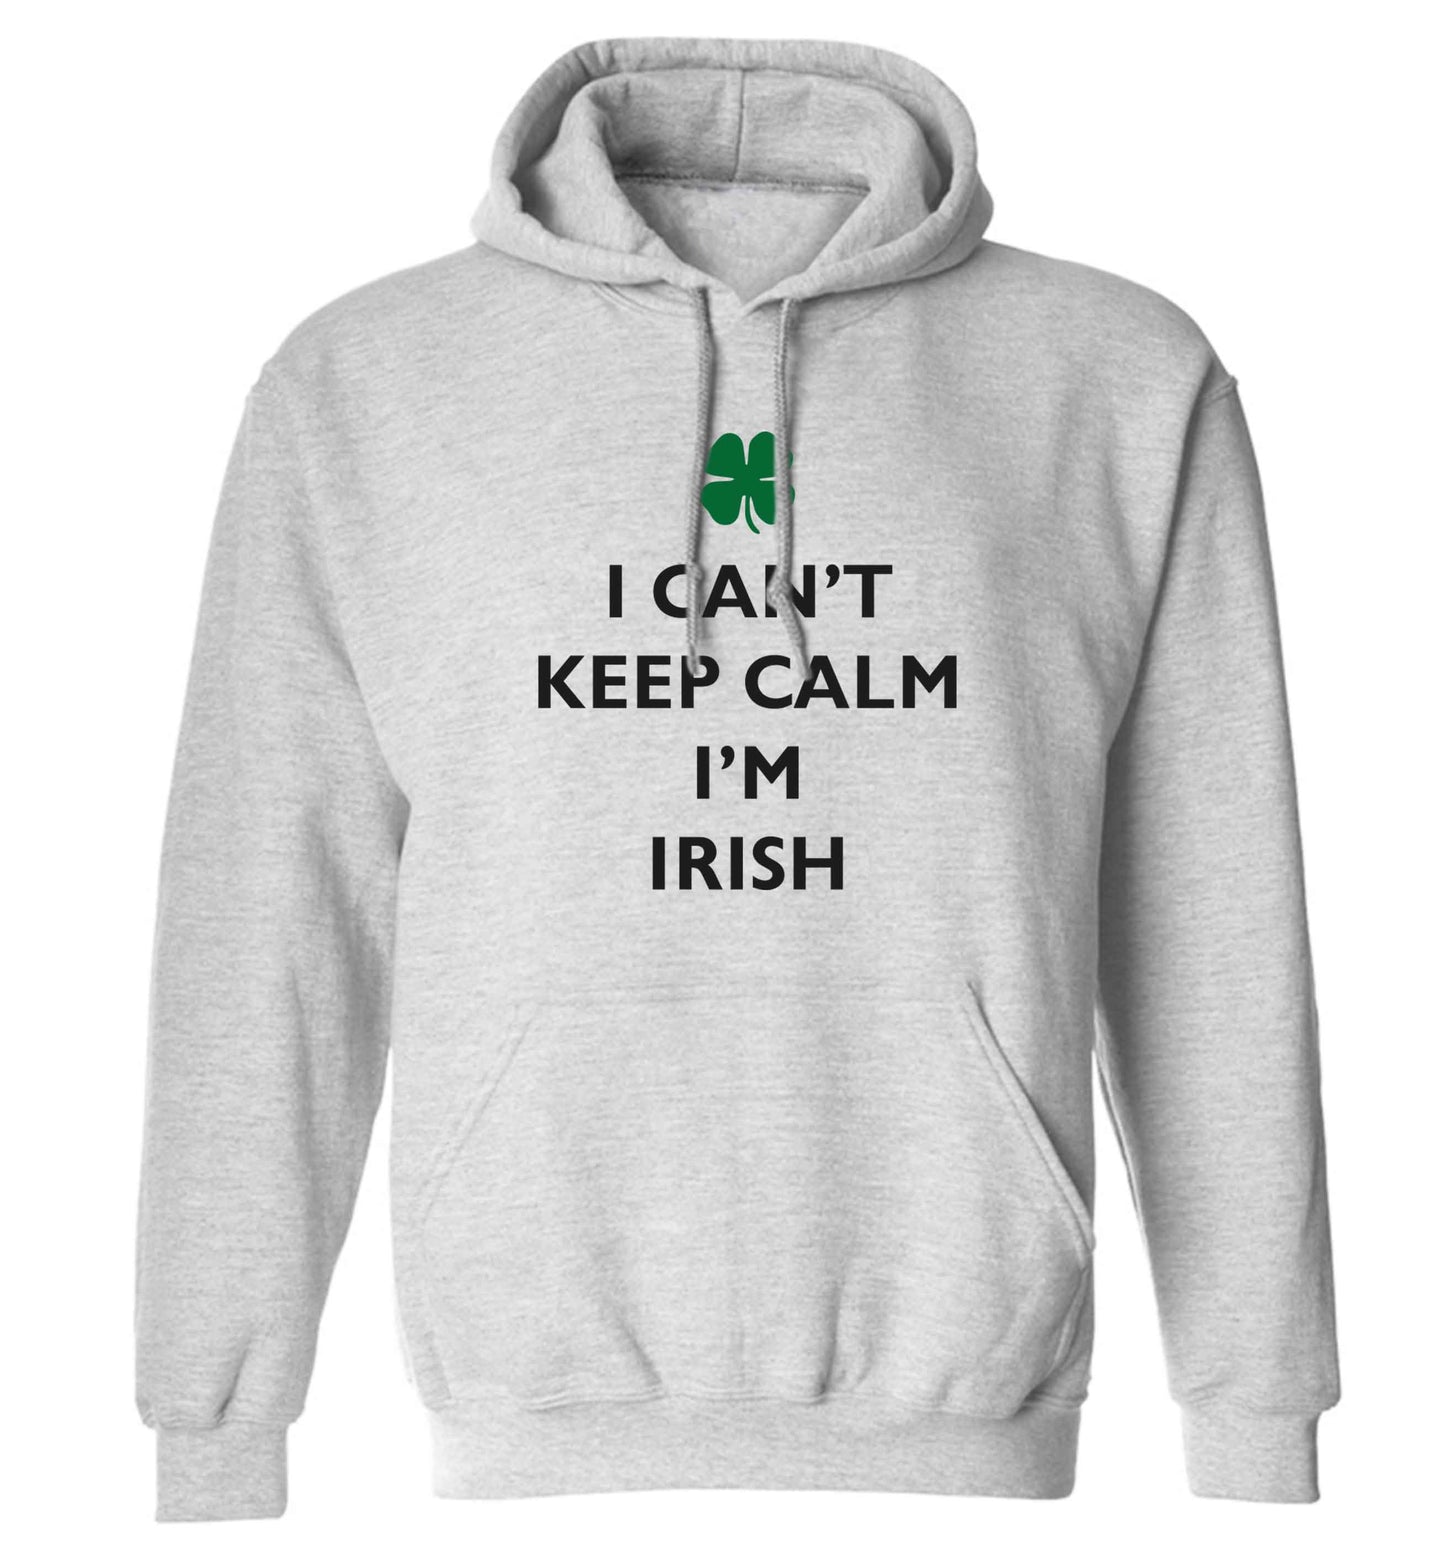 I can't keep calm I'm Irish adults unisex grey hoodie 2XL